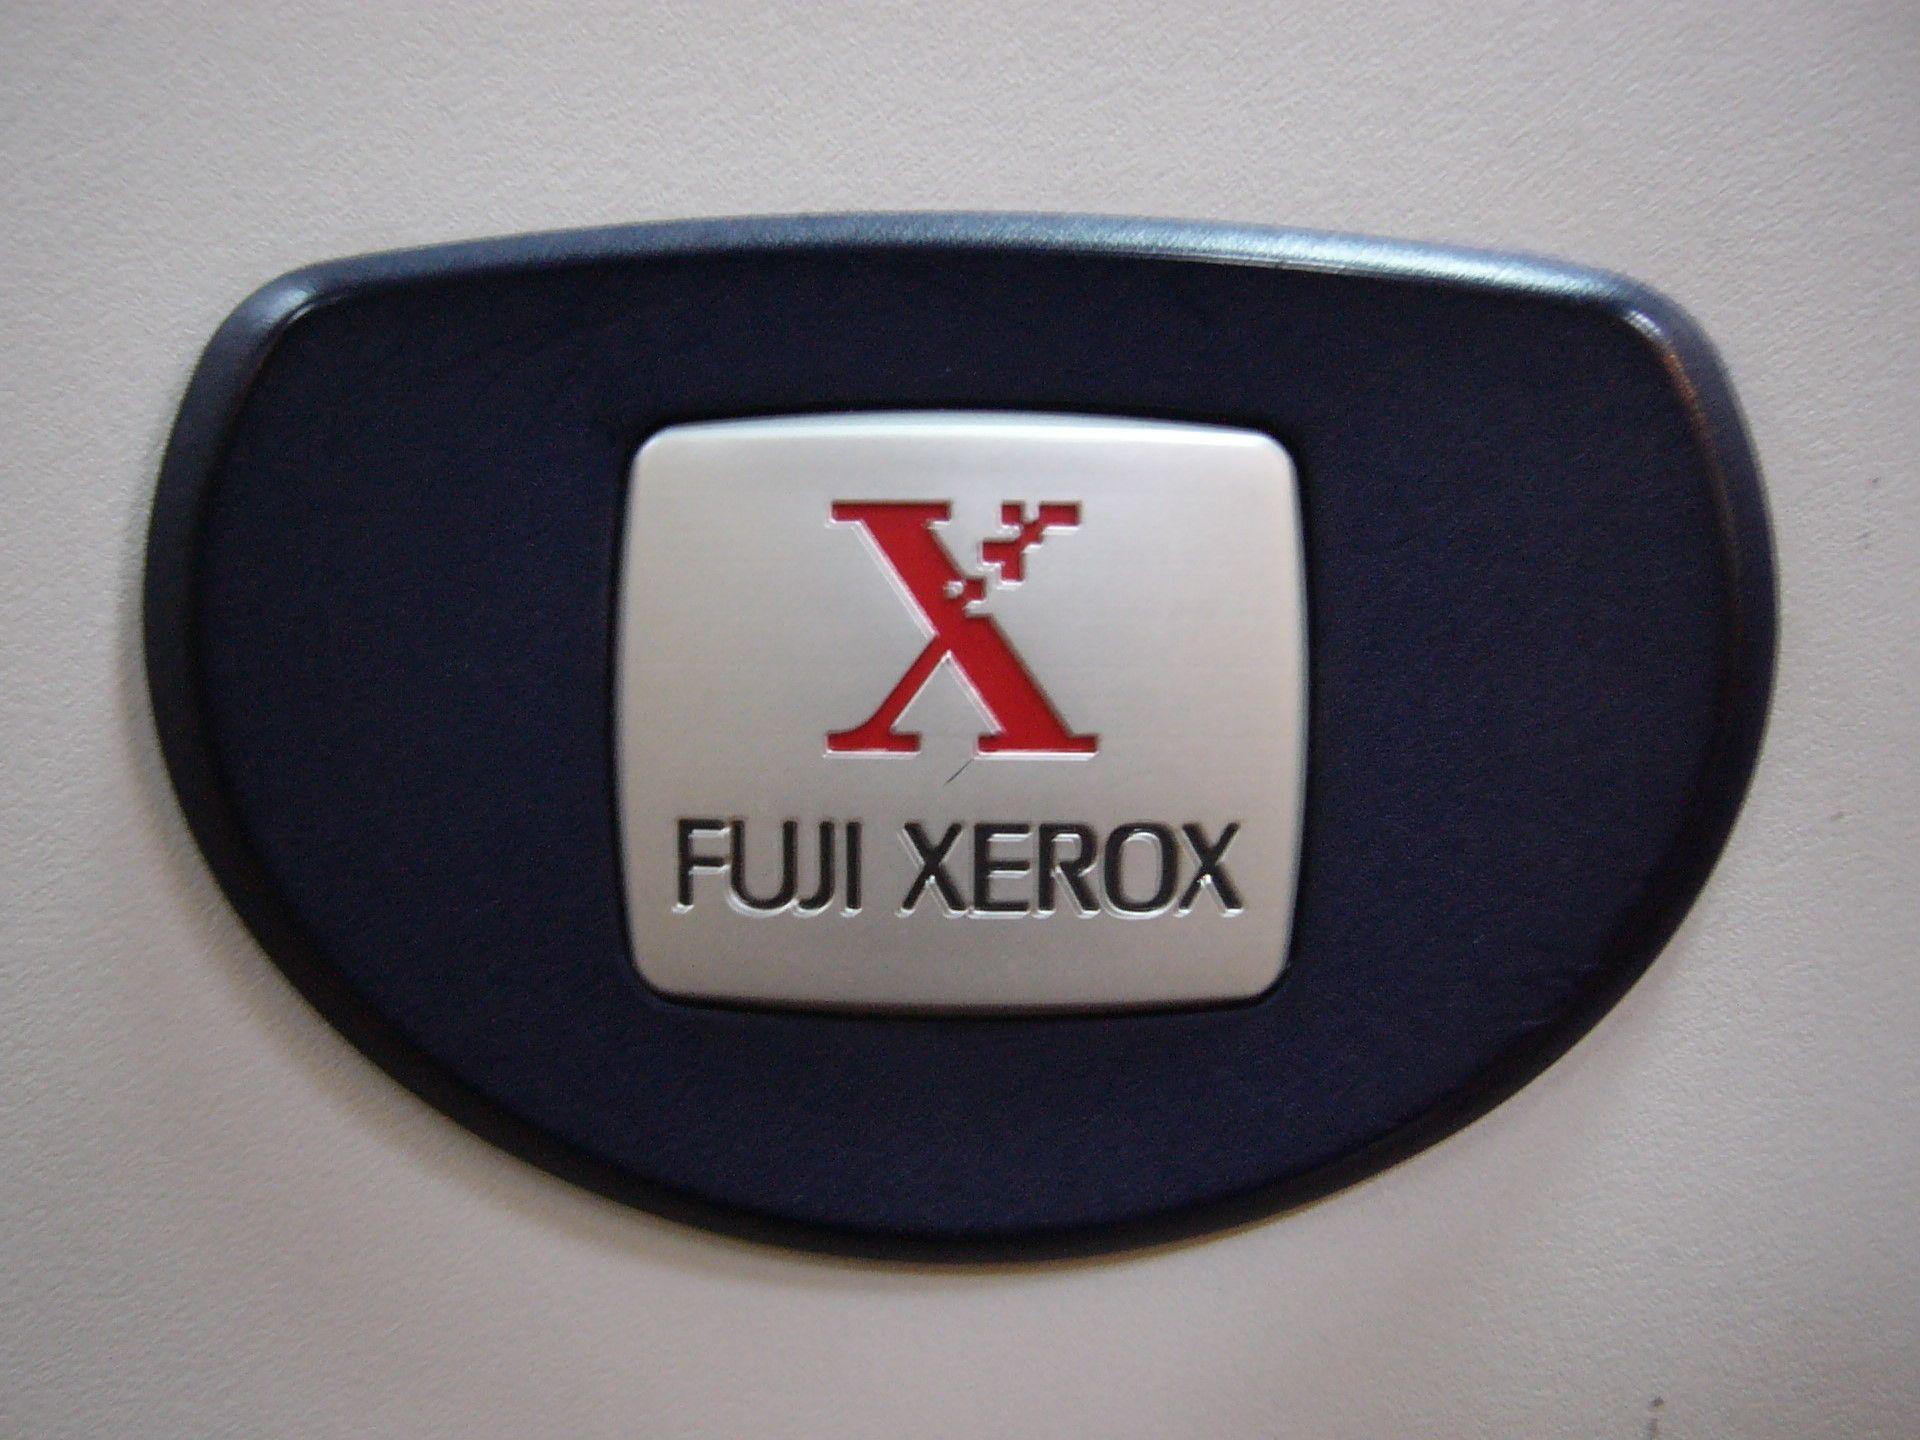 Fuji Xerox Logo - Fuji Xerox logo on Document Centre